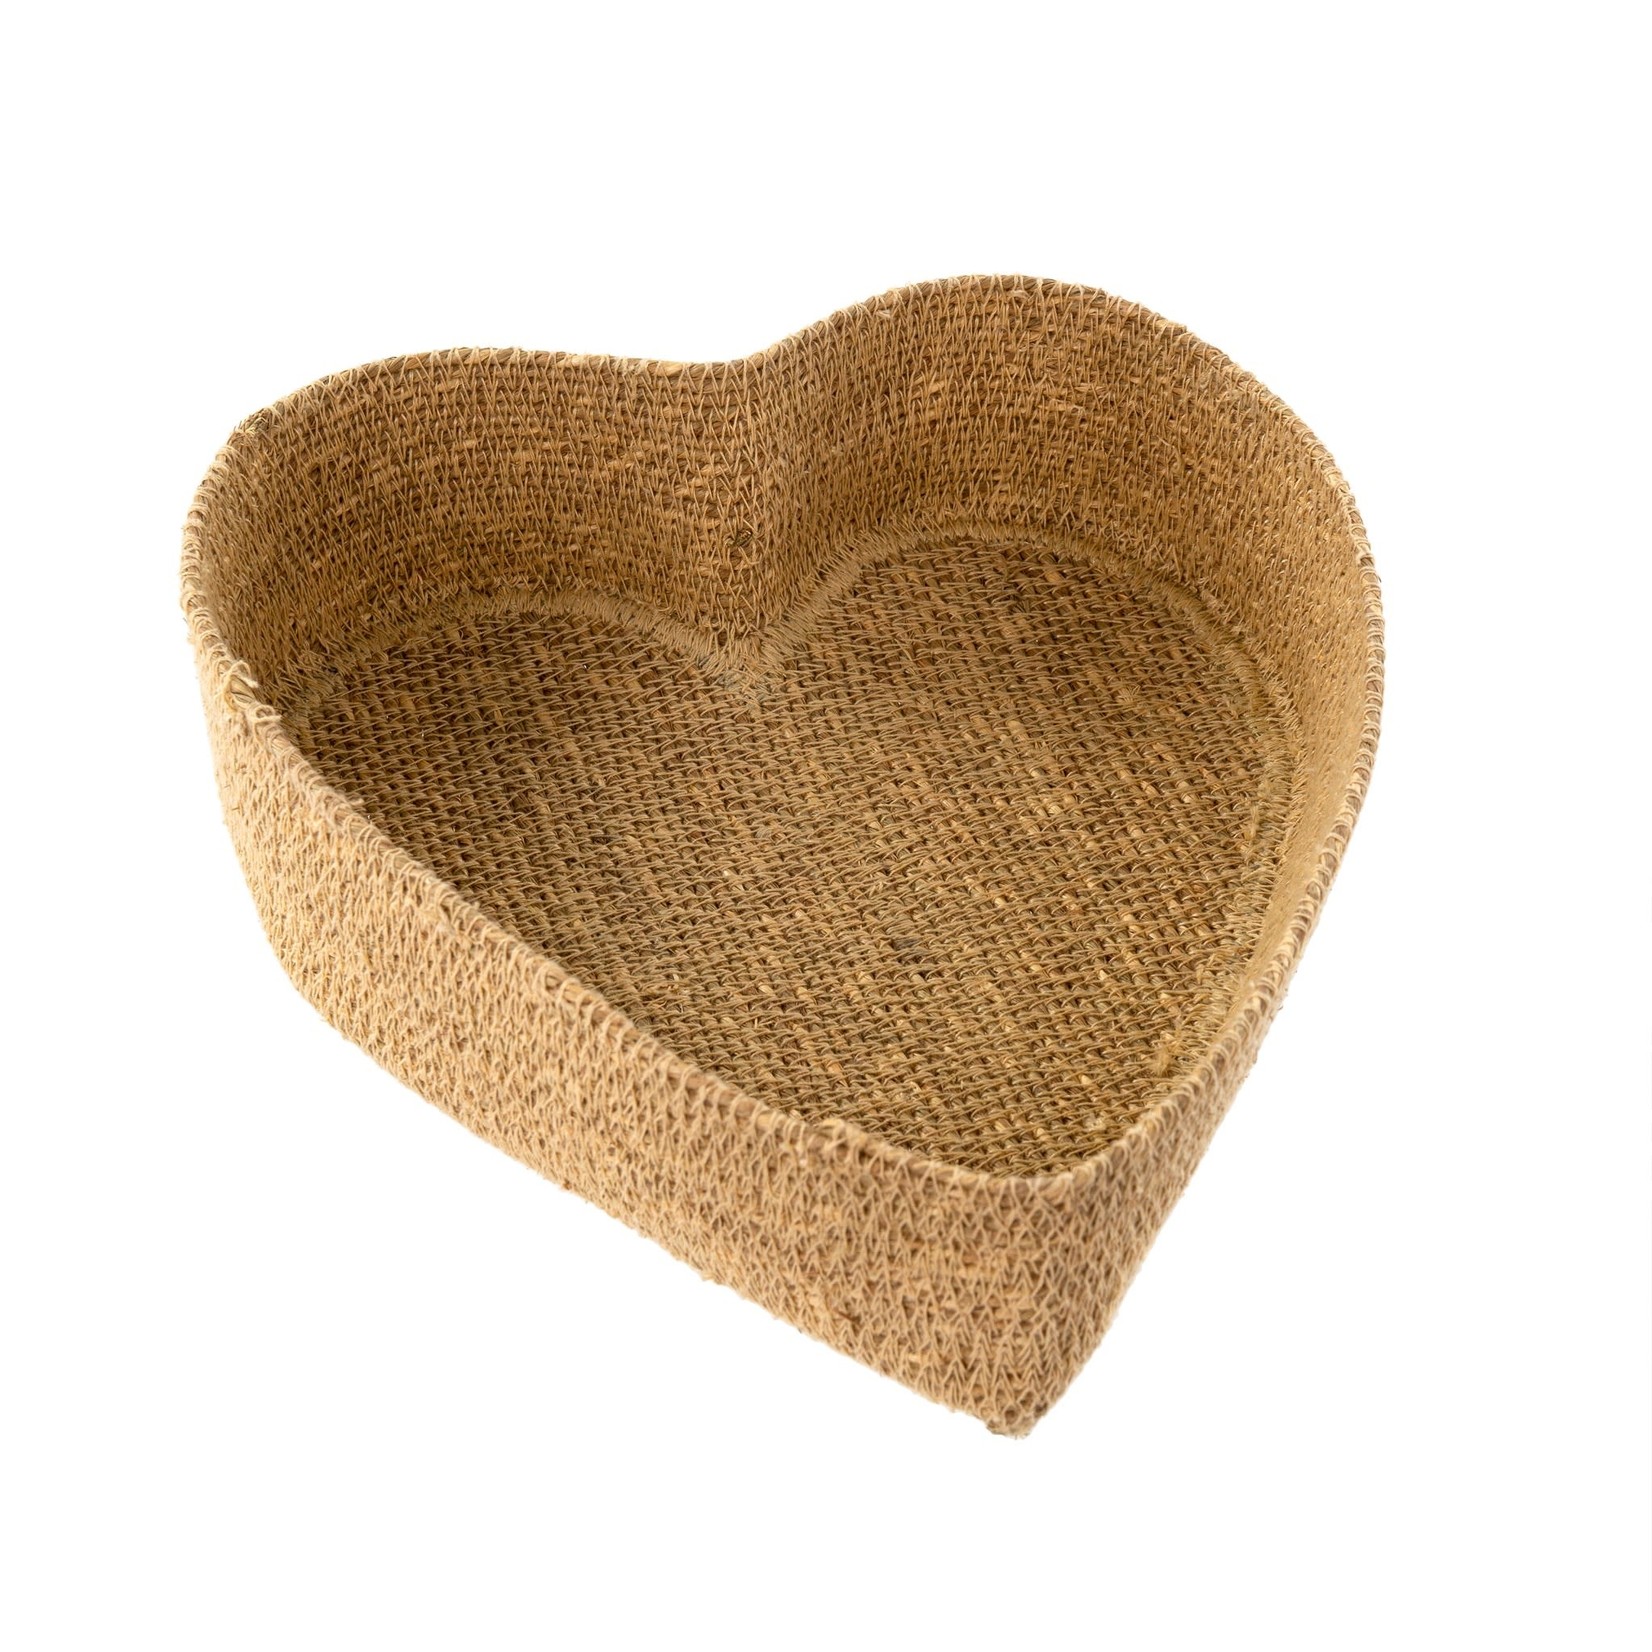 Indaba Natural Heart Seagrass Basket